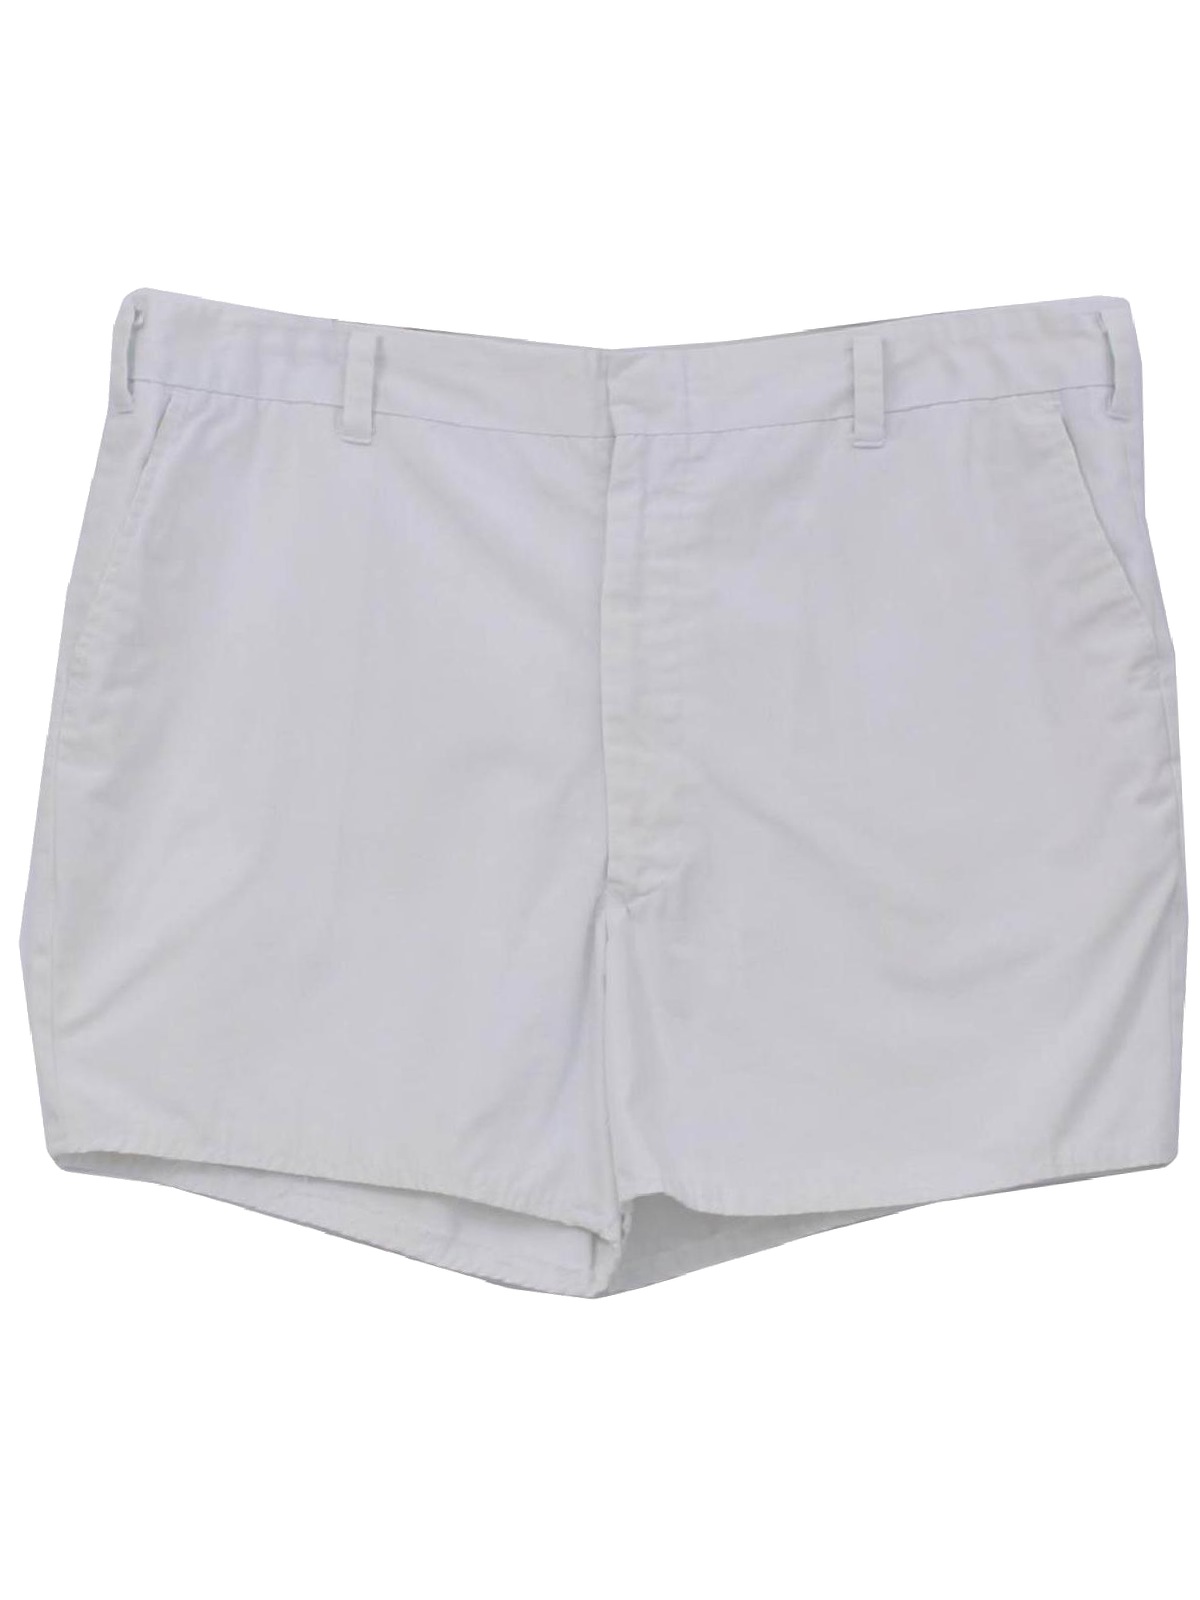 Retro 1960's Shorts (Campus) : 60s -Campus- Mens chalk white cotton ...